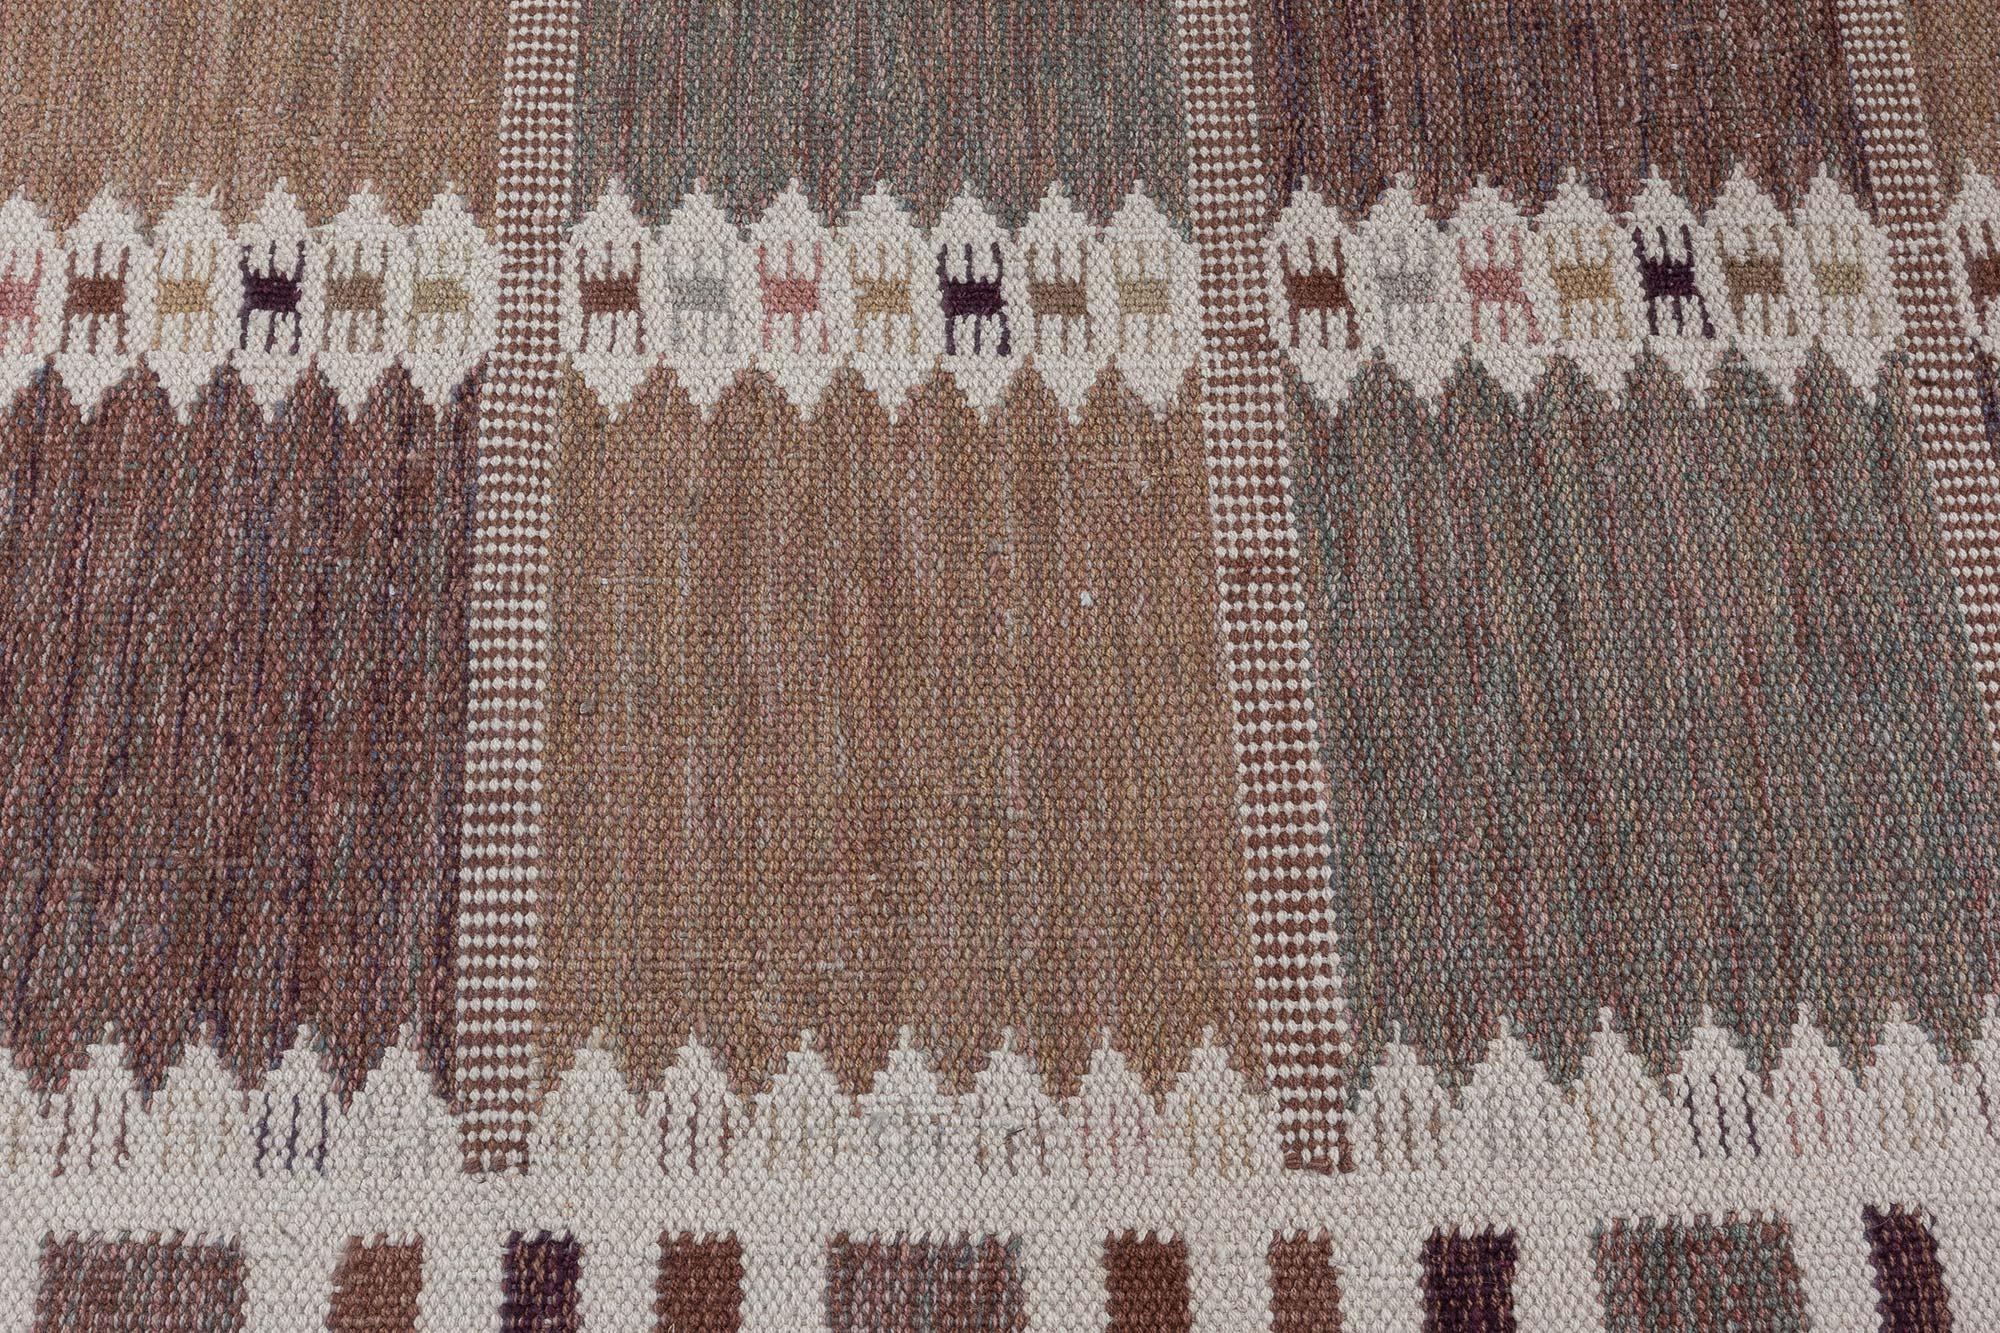 Modern Swedish Flat Weave Rug by Doris Leslie Blau
Size: 8'3